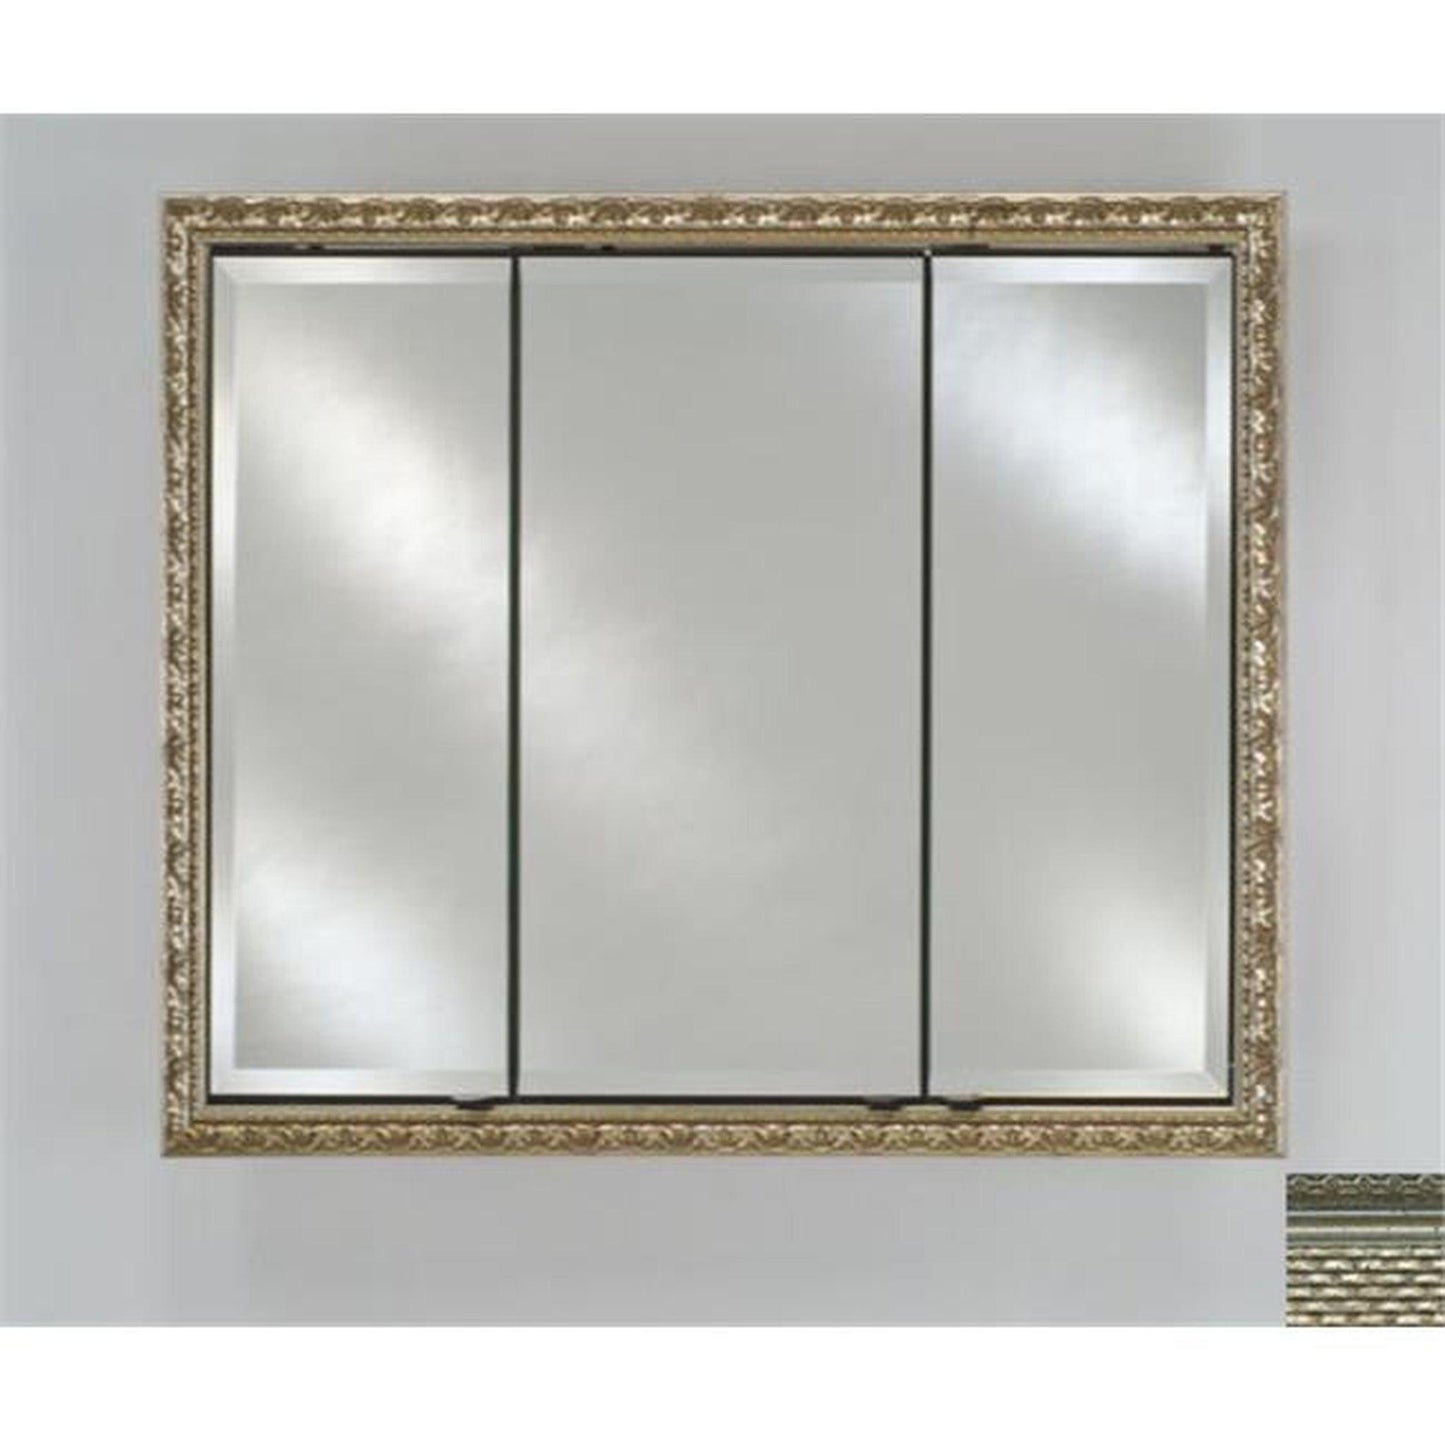 Afina Signature 44" x 30" Elegance Antique Silver Recessed Triple Door Medicine Cabinet With Beveled Edge Mirror